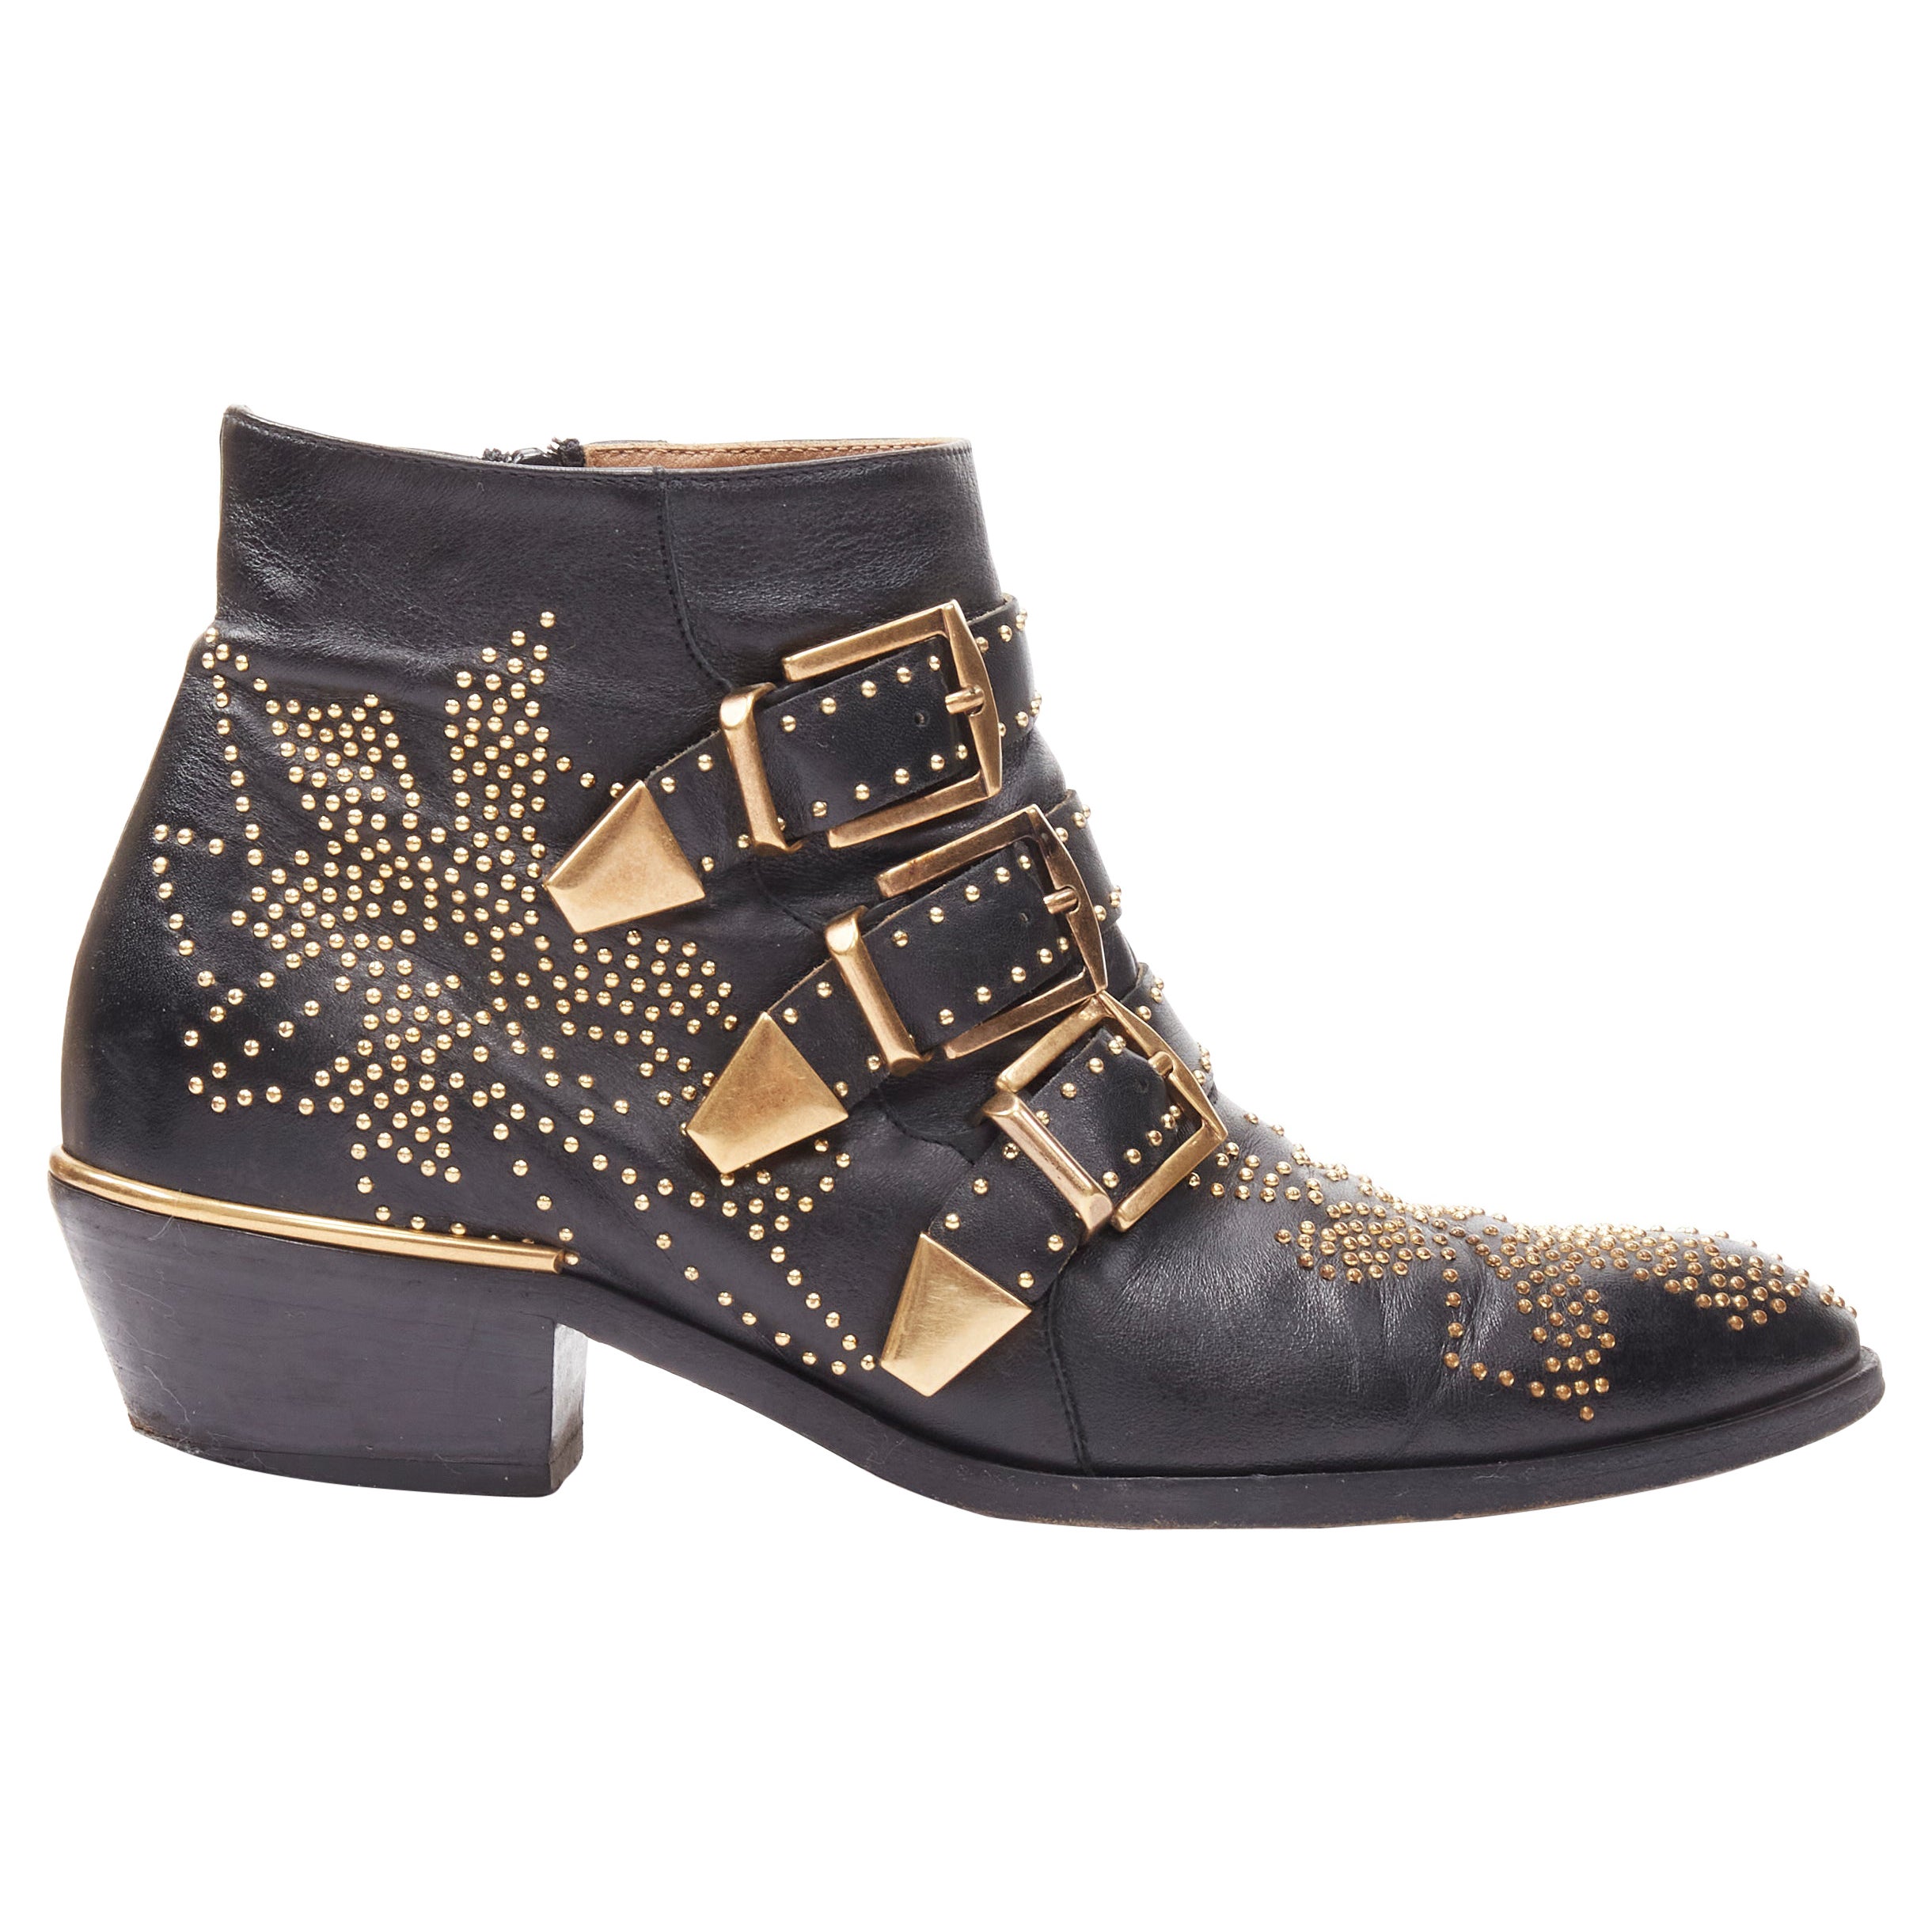 CHLOE Susanna black leather gold floral studded buckle ankle boot EU36.5